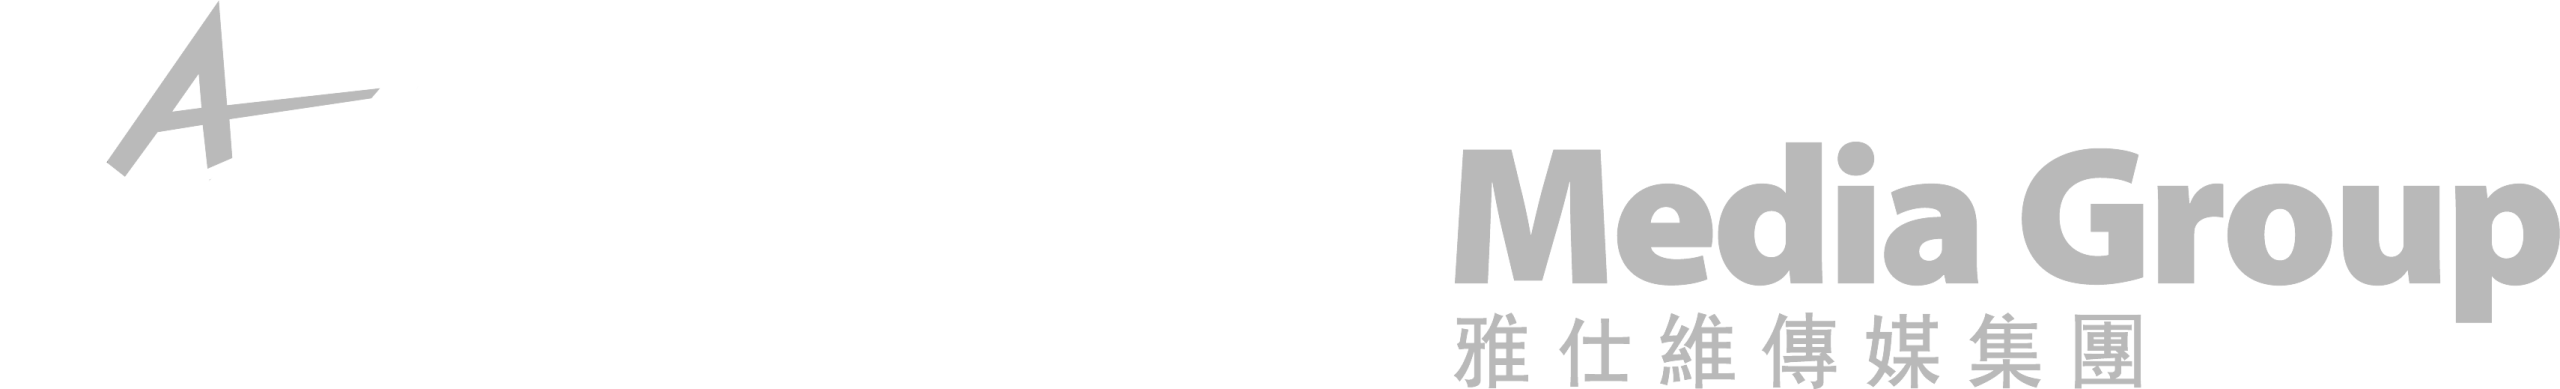 Asiaray Media Group logo